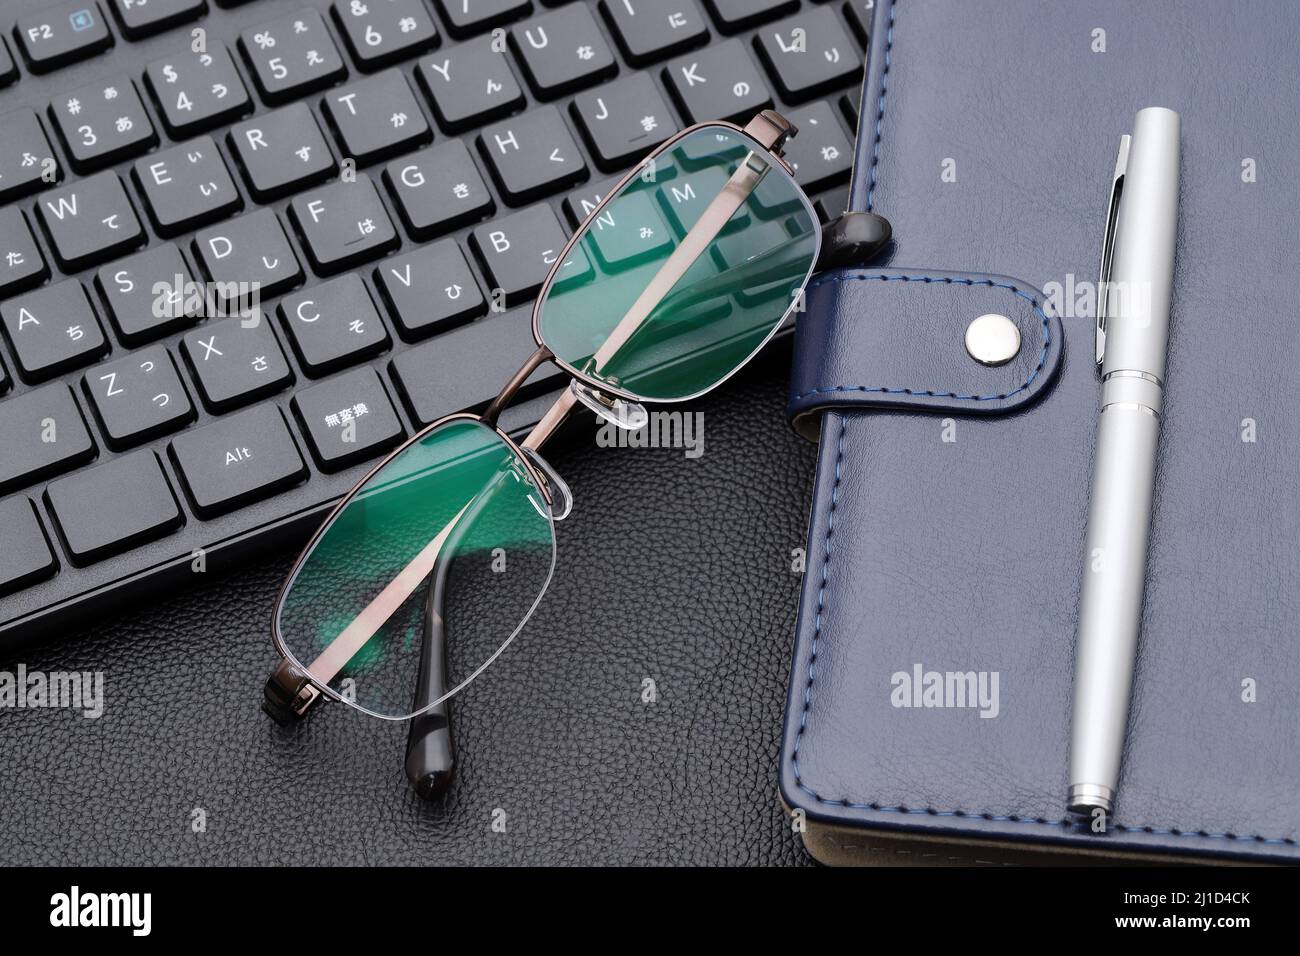 Eyesight glasses with note book, computer keyboard. Alphabetics and Japanese hiragana typing keyboard. Stock Photo